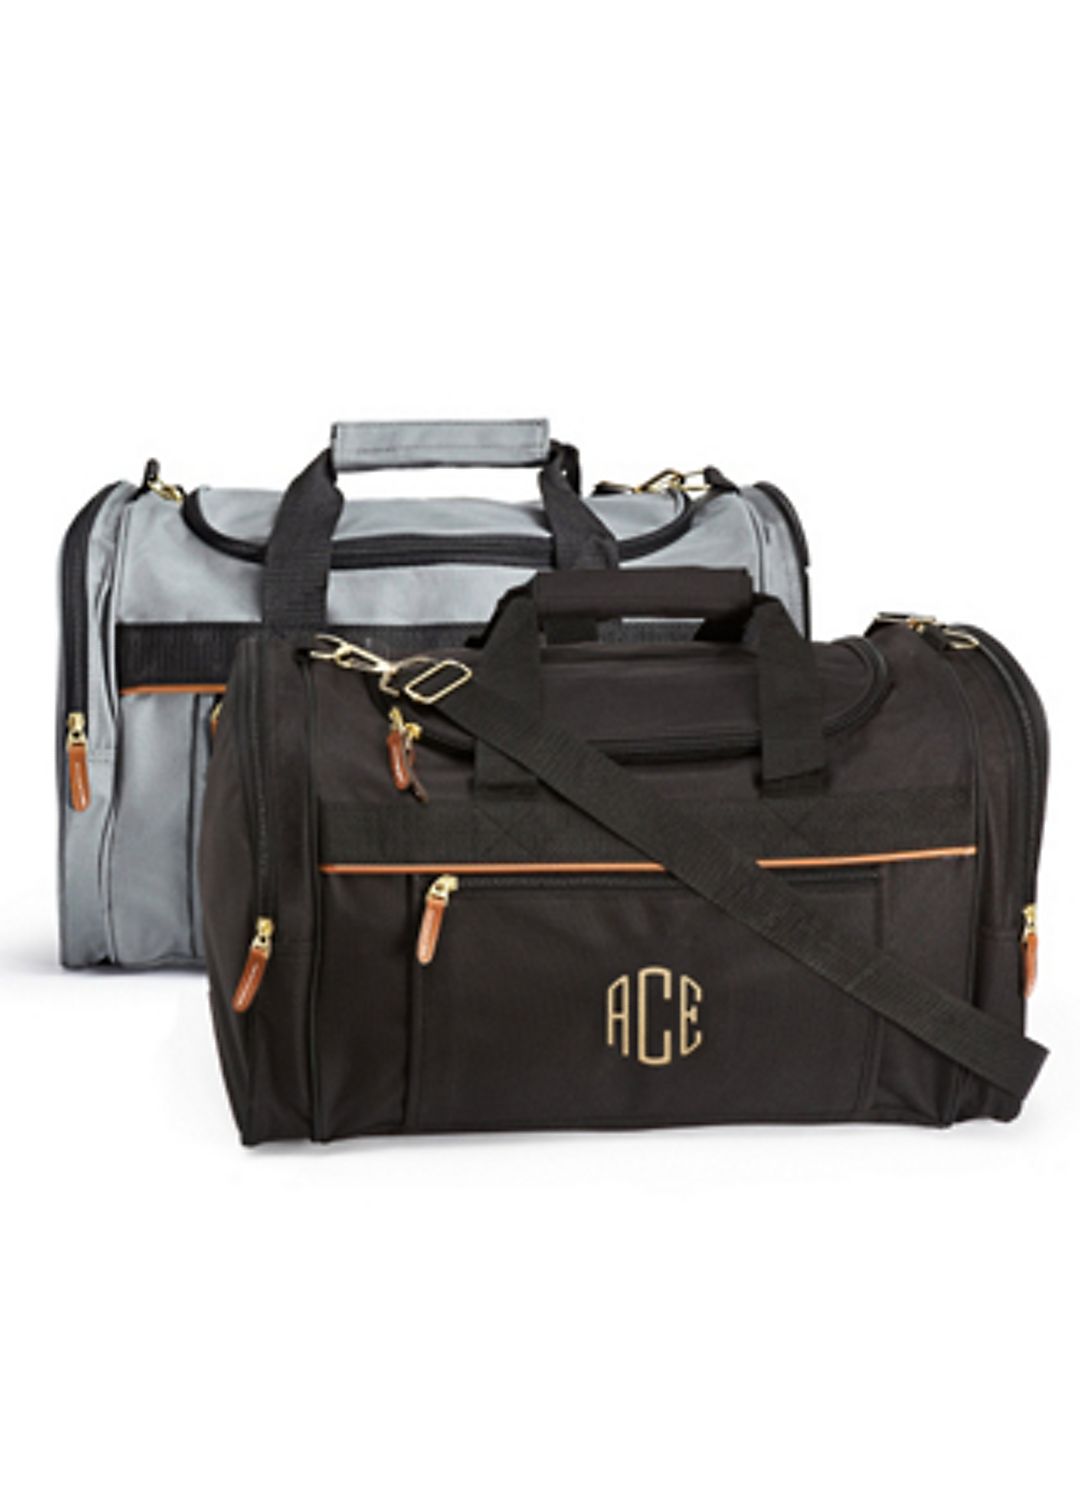 DB Exclusive Personalized Weekender Bag Image 2